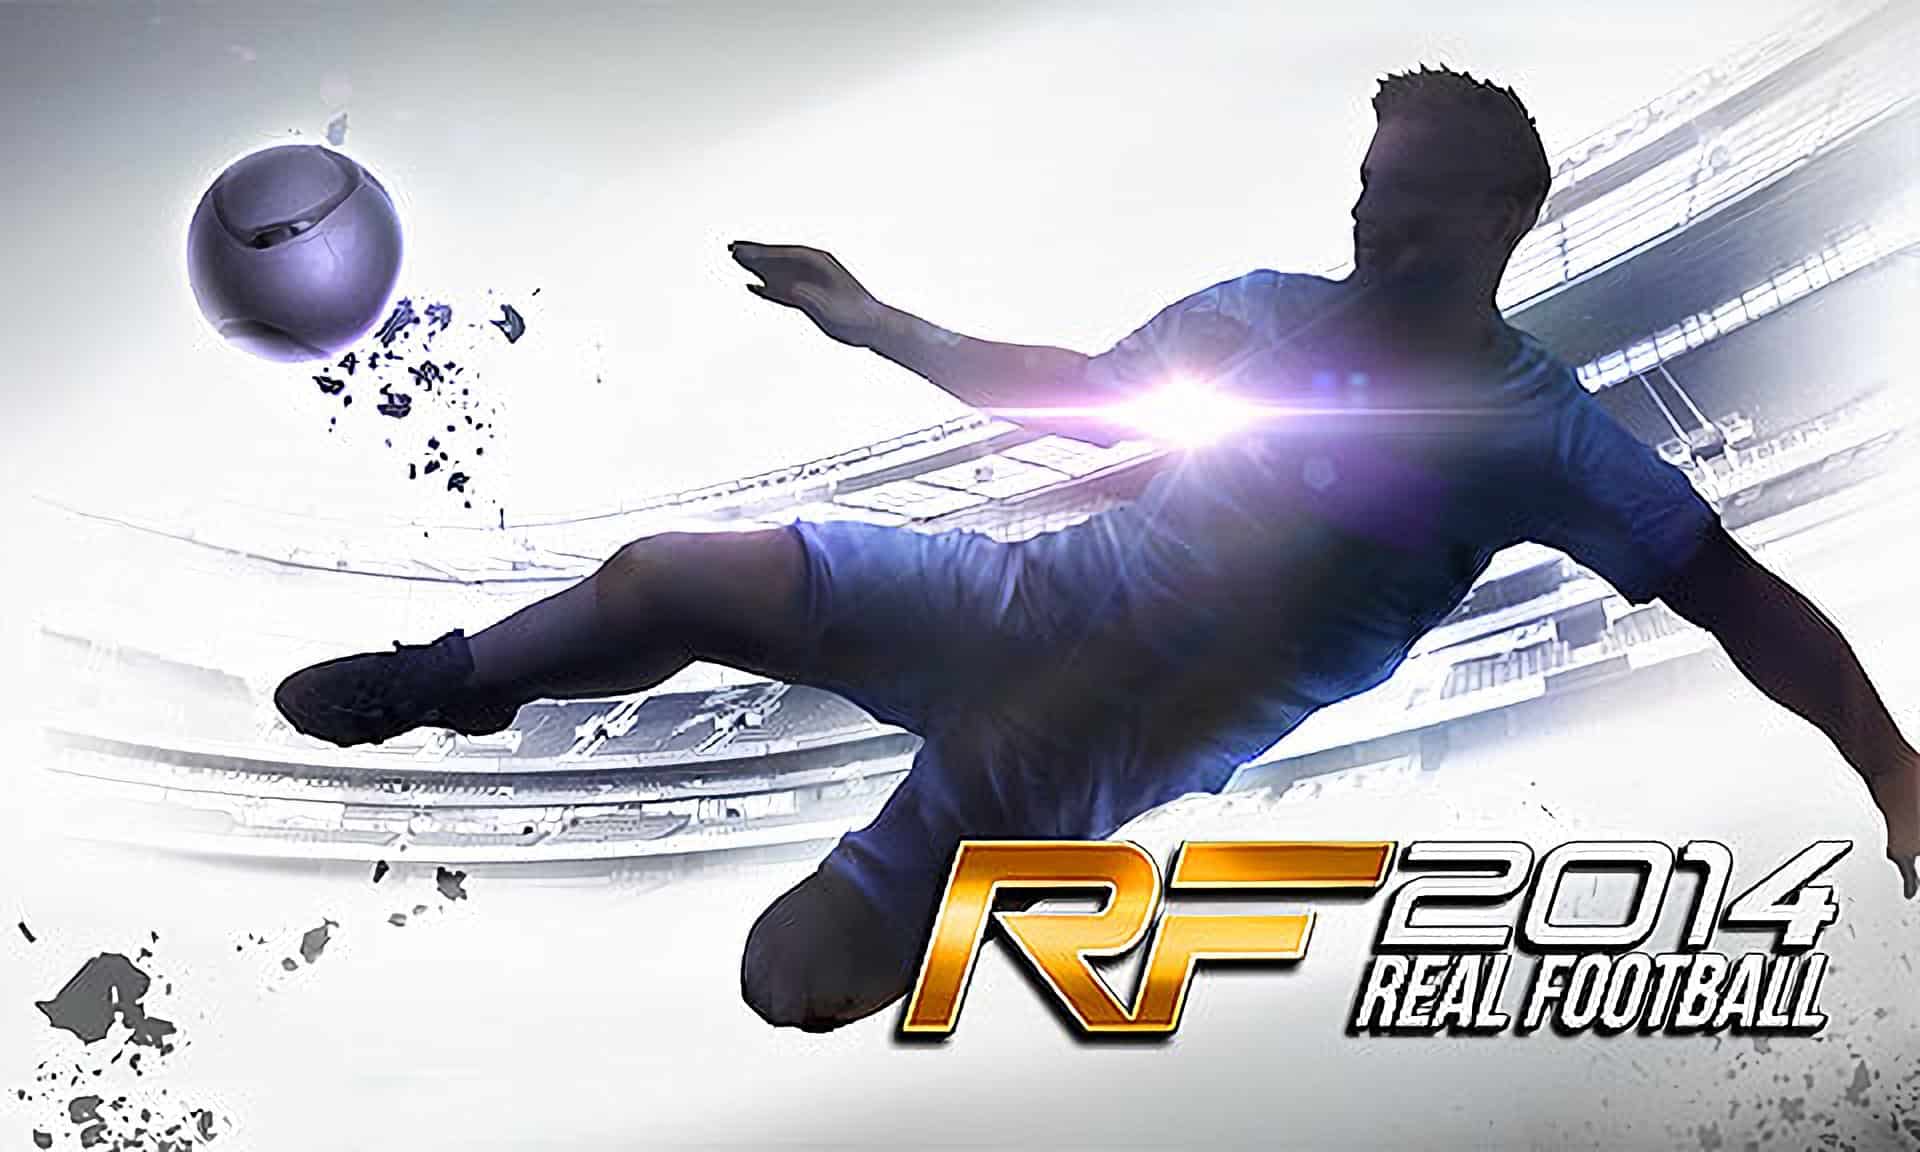 upscale-real-football-2014 Real Football 2014 para celulares Java já está disponível